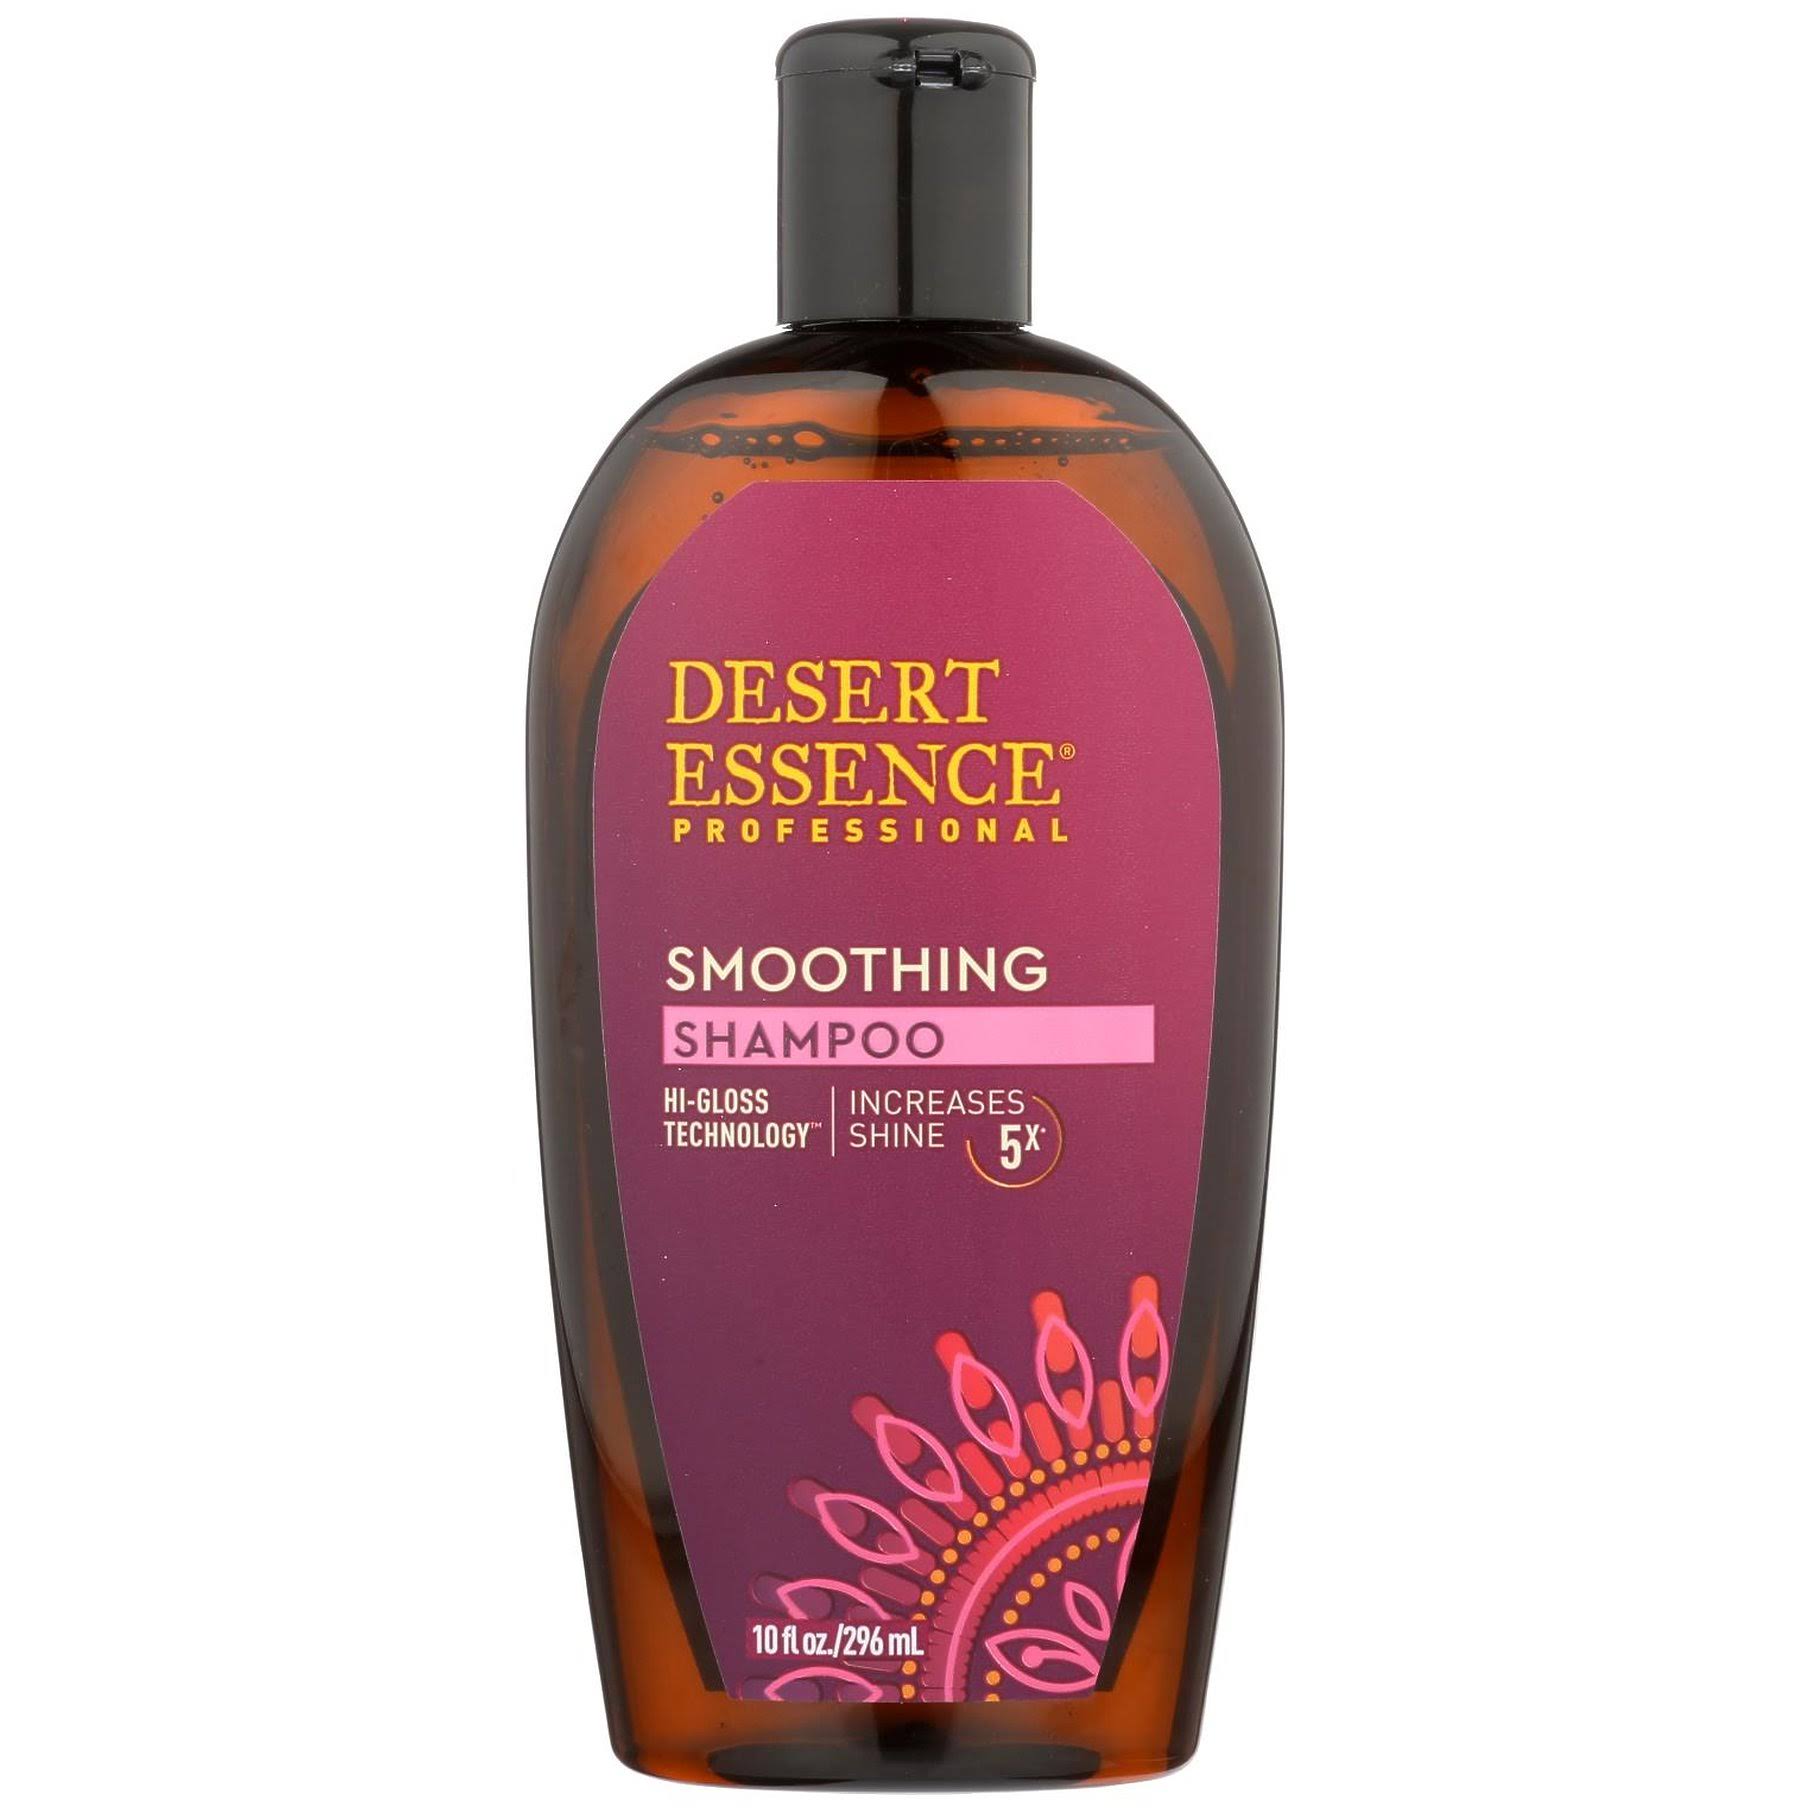 Desert Essence - Shampoo -Smoothing - 10 fl oz